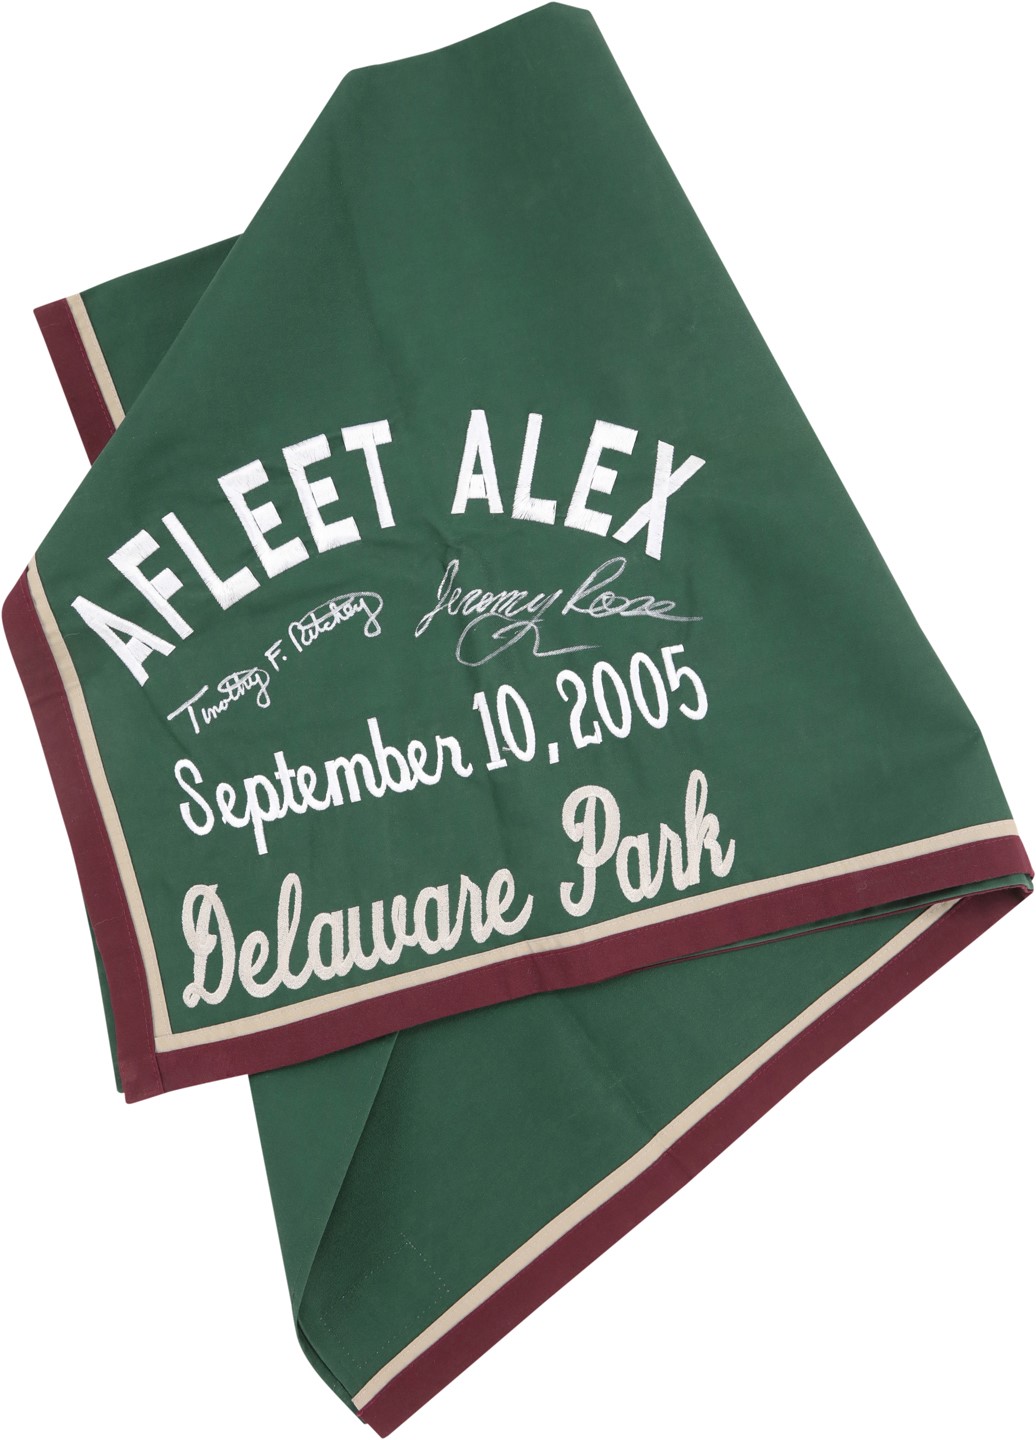 Afleet Alex Delaware Park Worn Saddlecloth